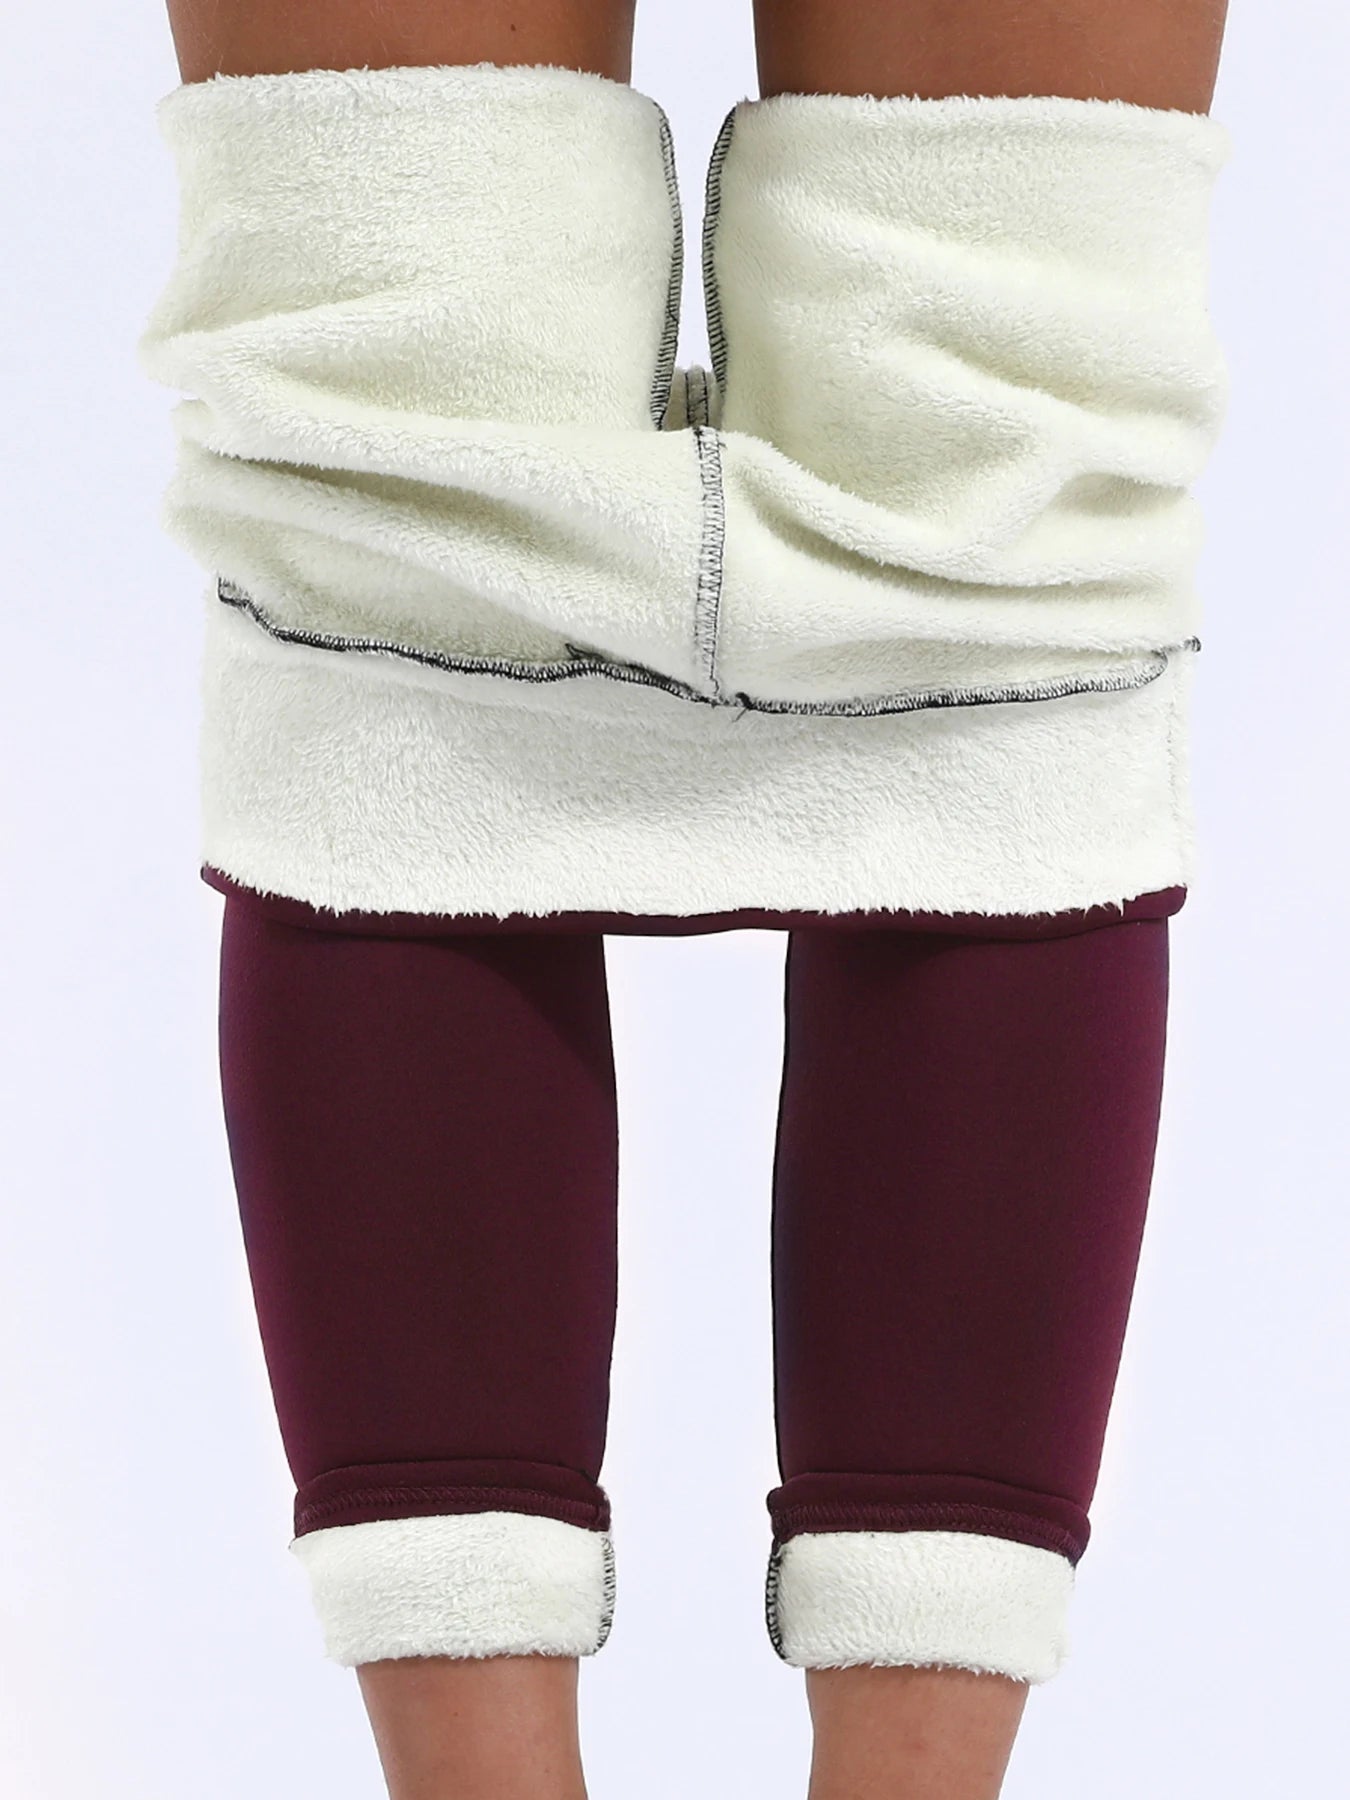 Cozy Velvet Winter Leggings for Women - Solid Color High Waist Thick Pants  ourlum.com   